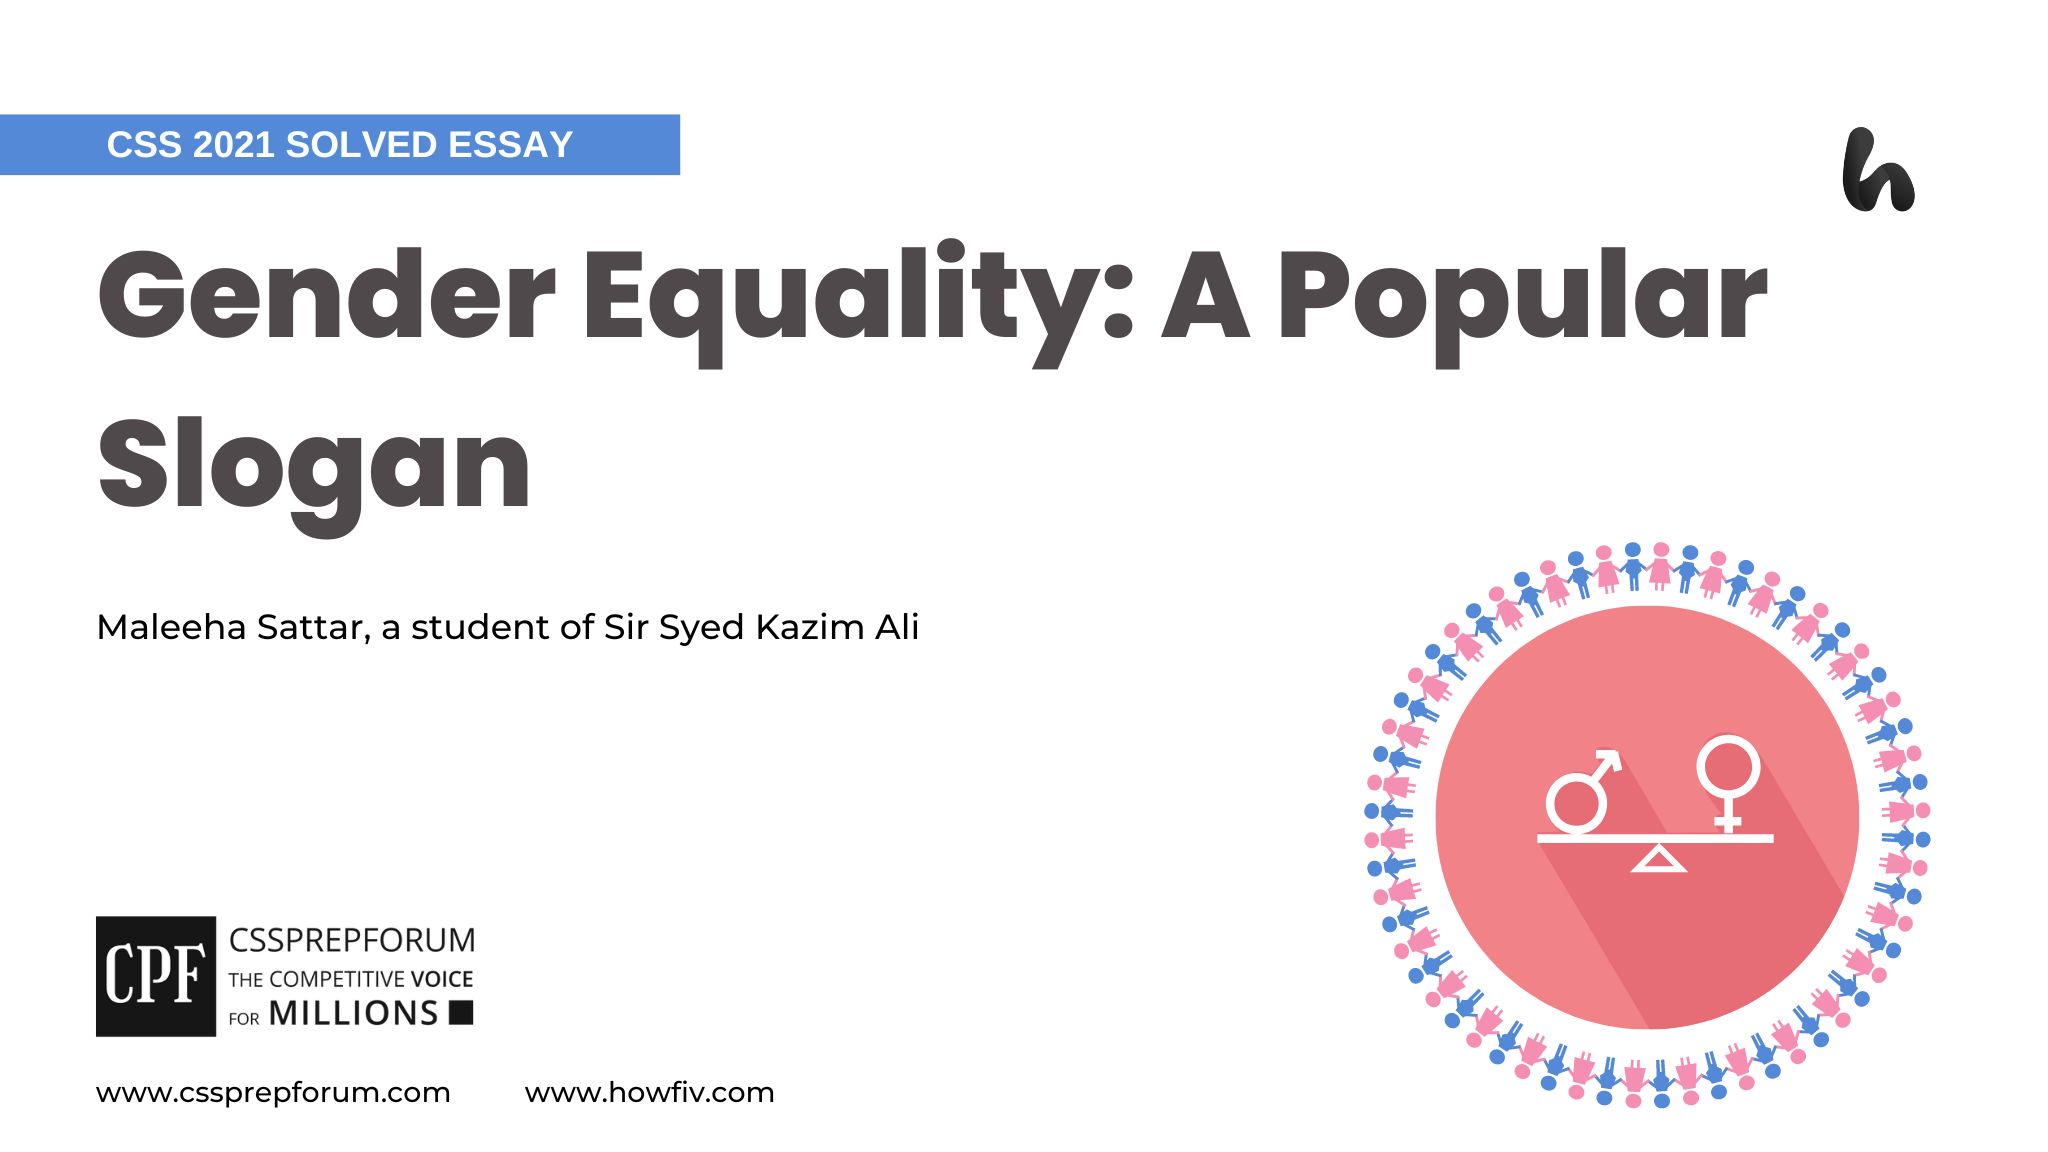 Gender Equality: A Popular Slogan by Maleeha Sattar